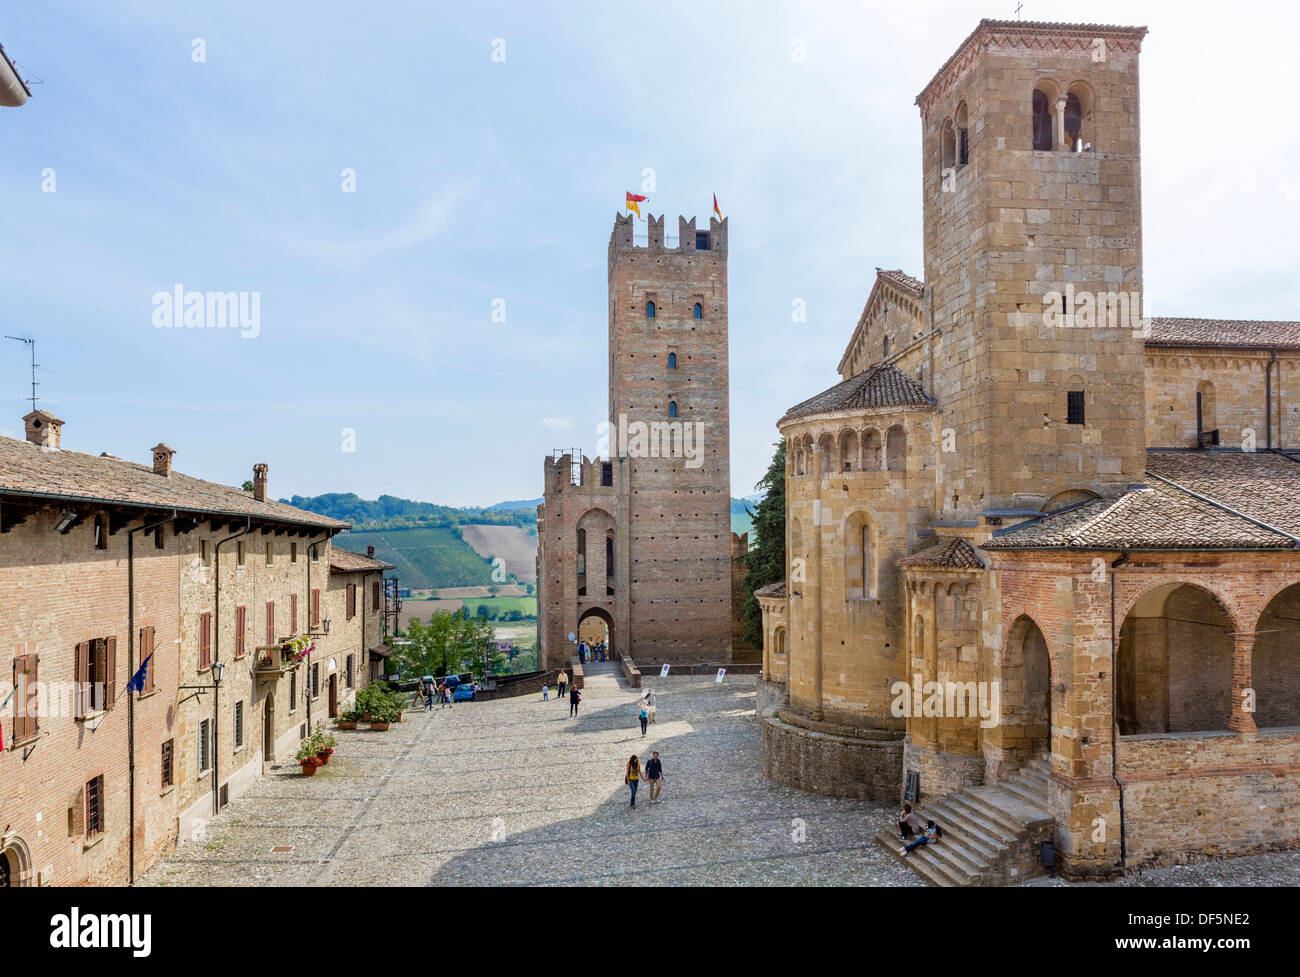 View over main square, Collegiate Church and Rocca Viscontea tower in medieval town of Castell'Arquato, Emilia Romagna, Italy Stock Photo